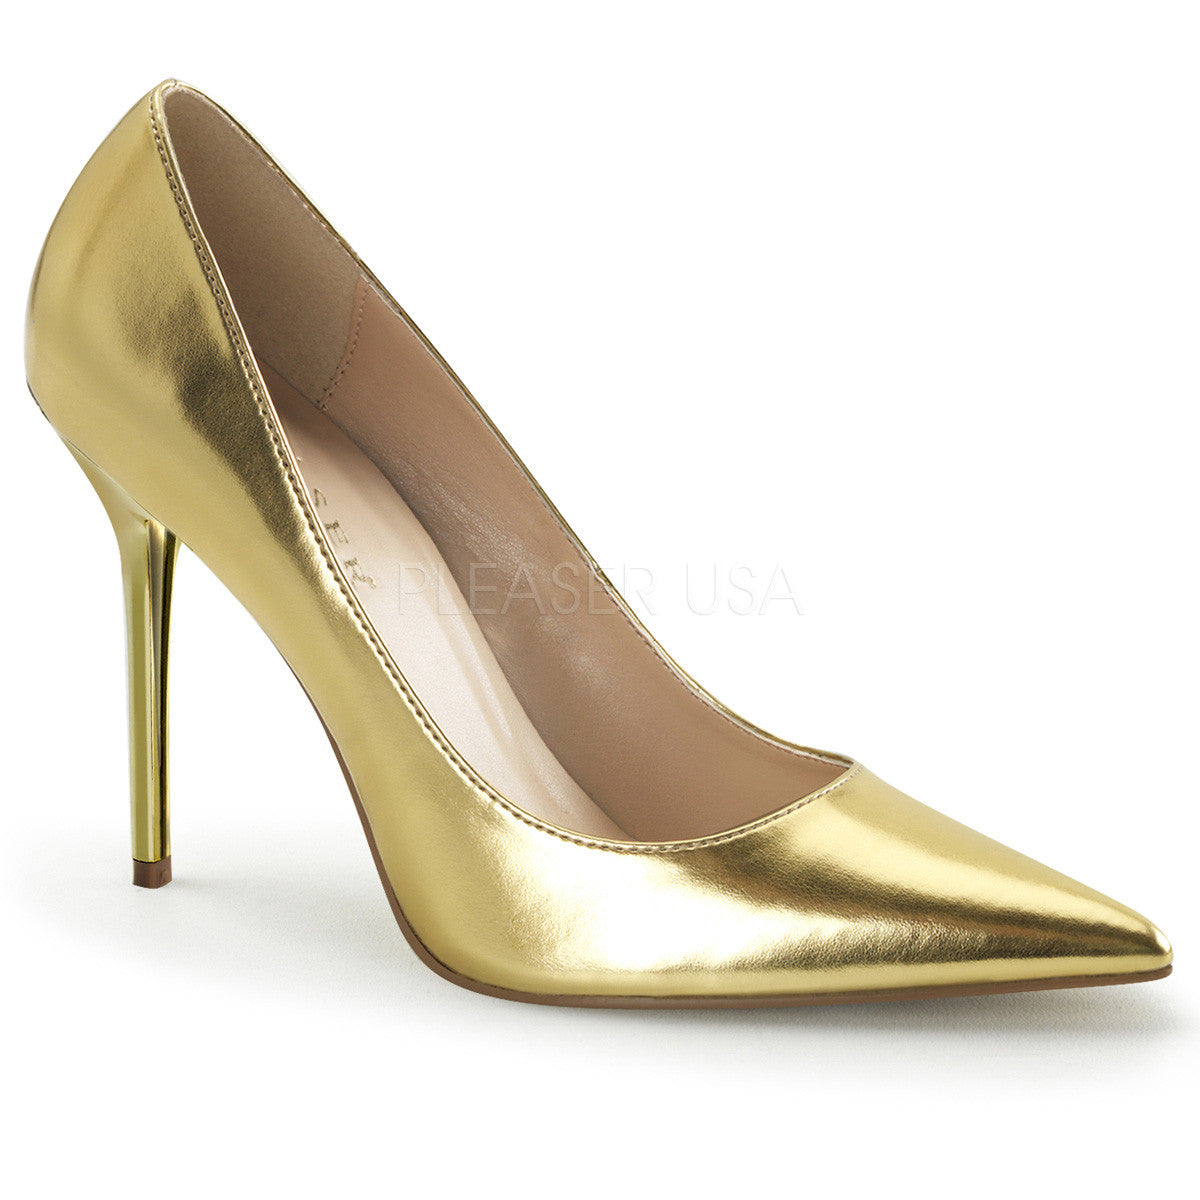 AXIUM Woman Rose Gold High Heels sandals 4Inch